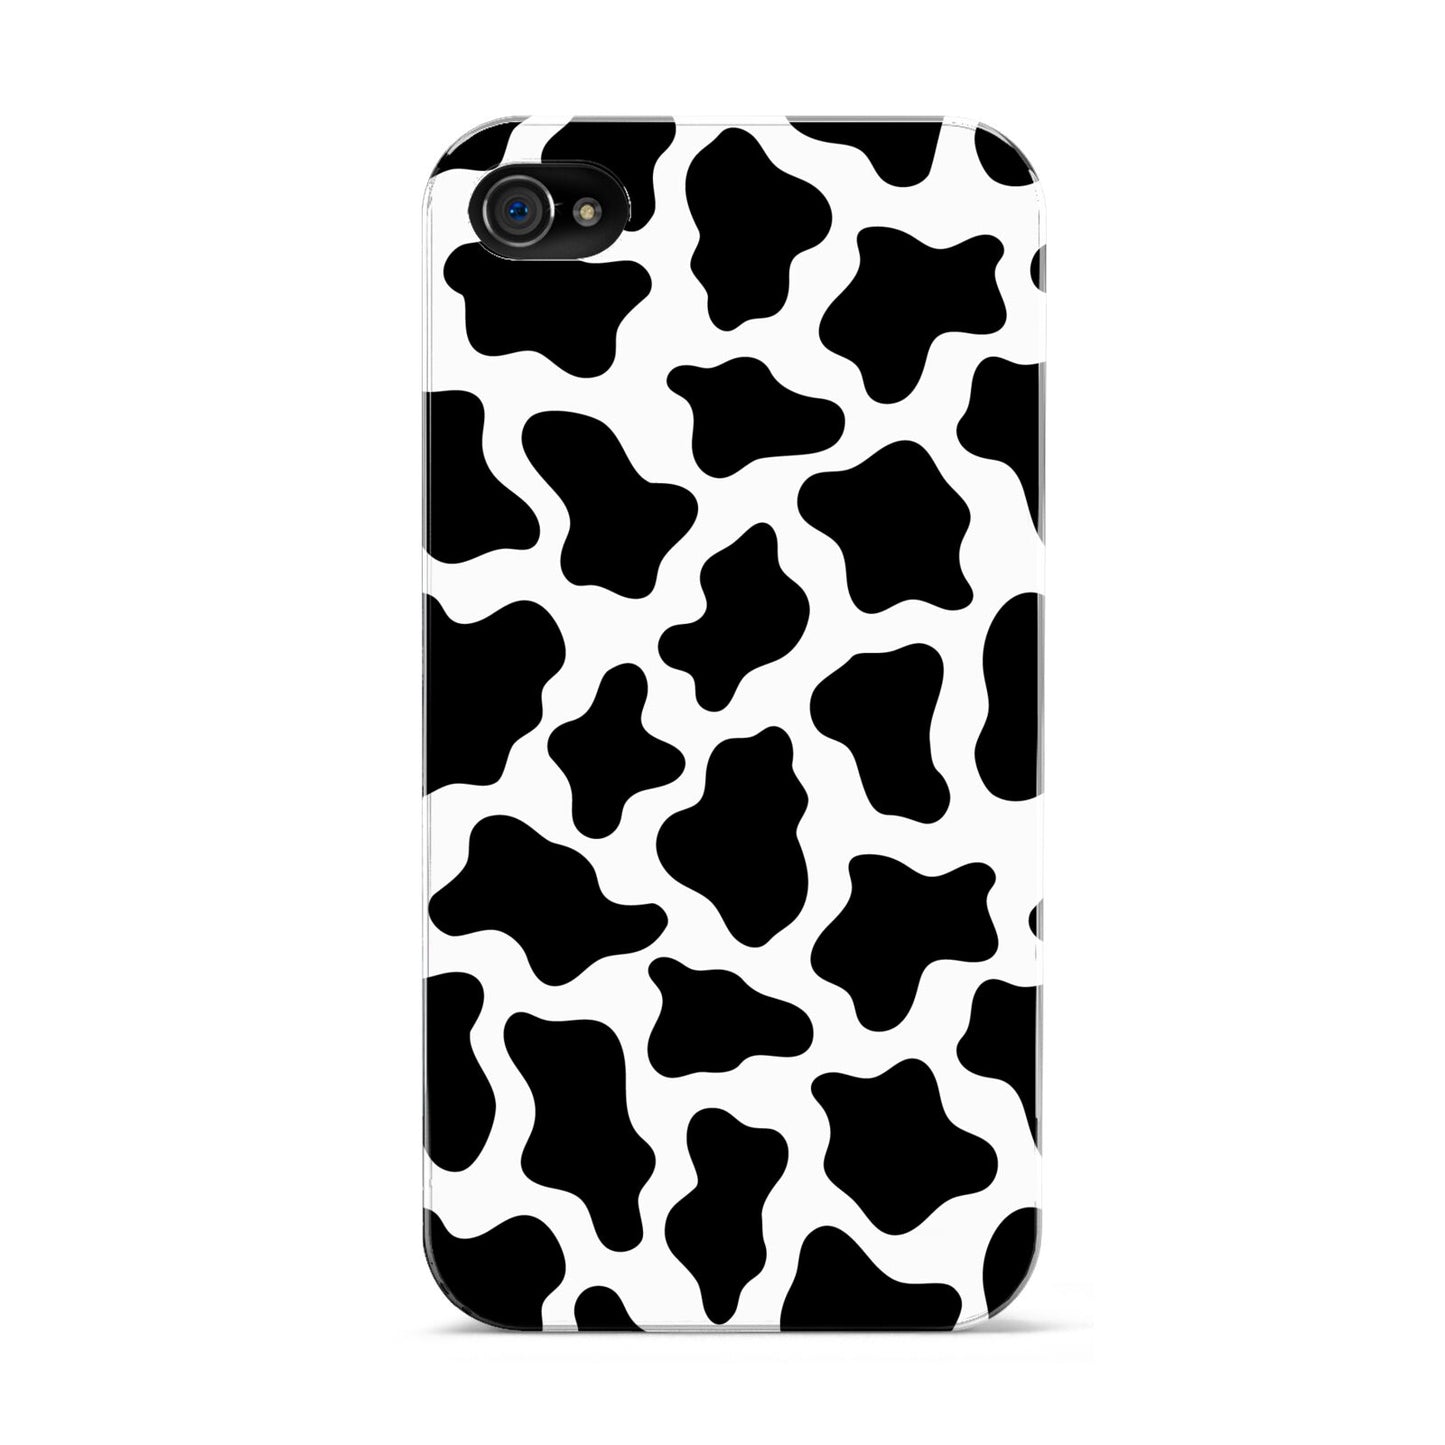 Cow Print Apple iPhone 4s Case